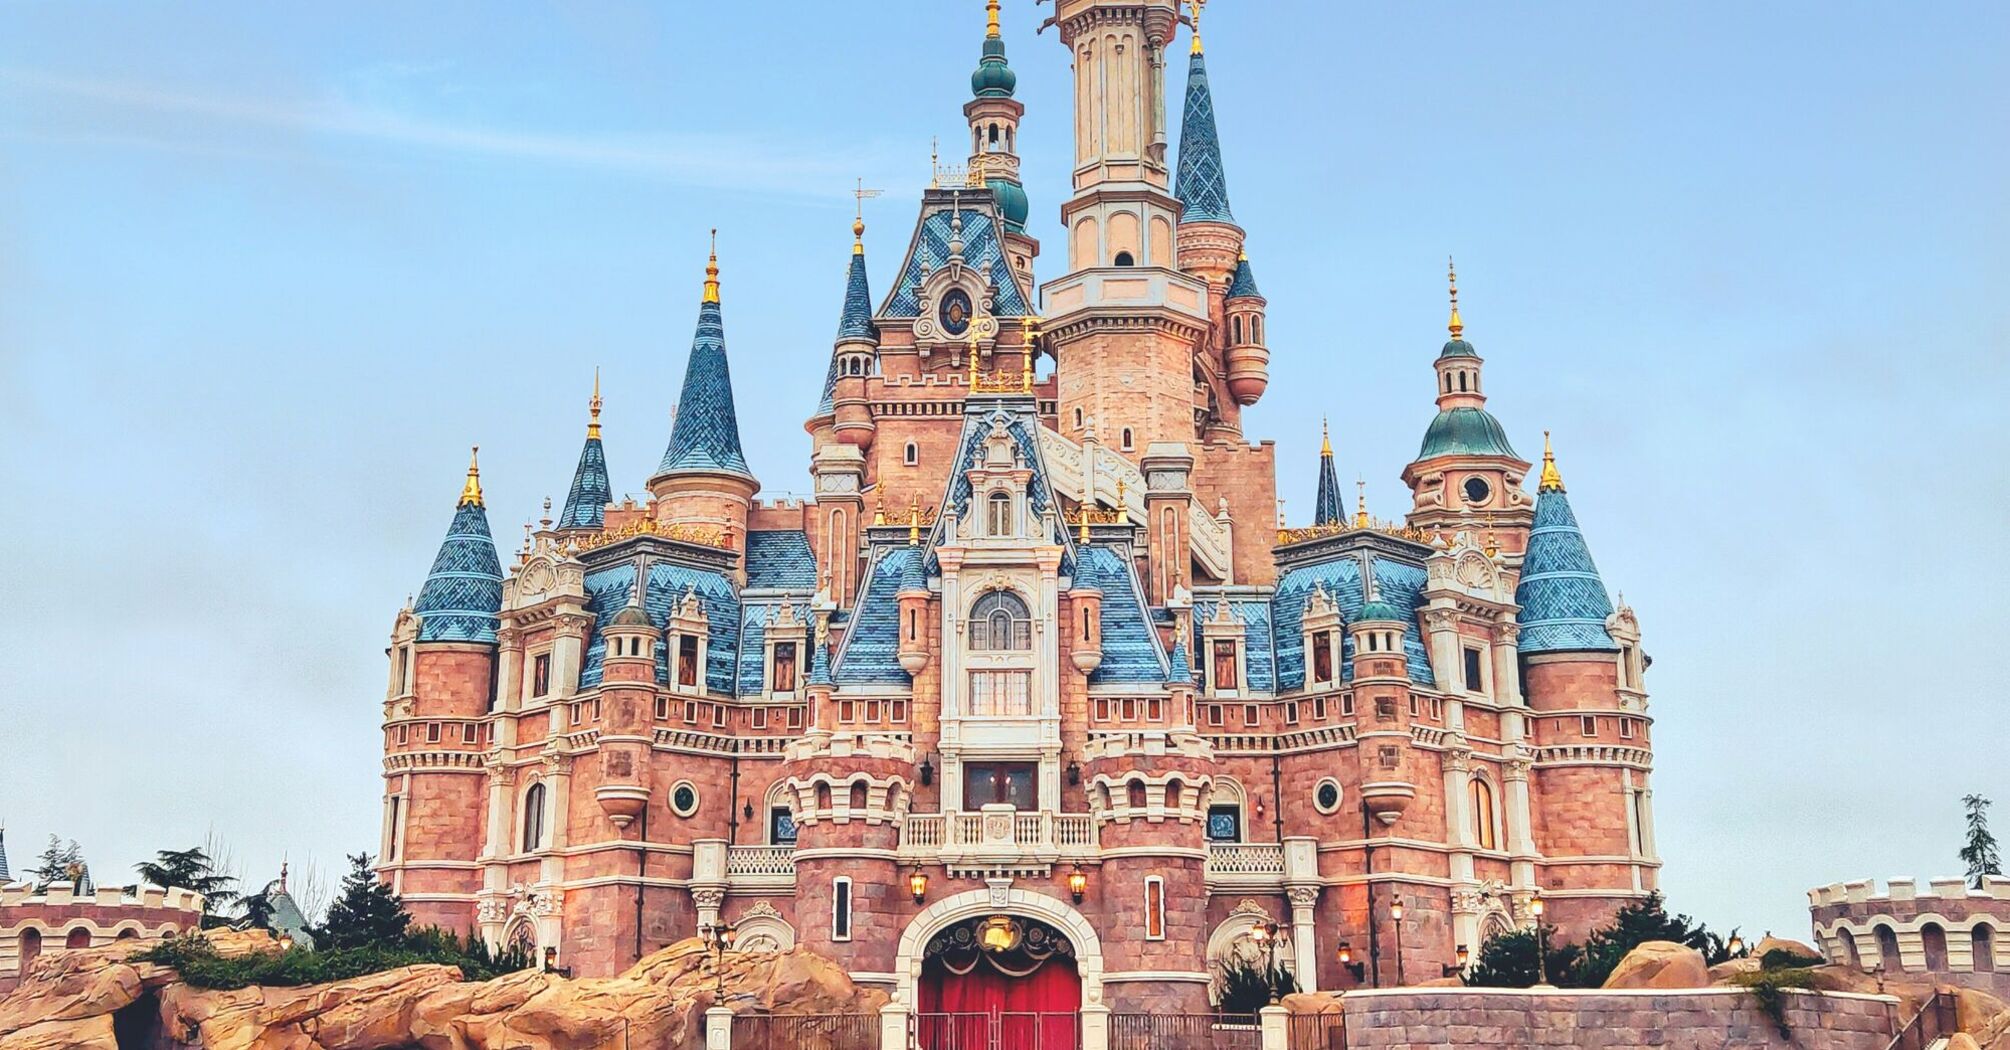 Shanghai Disney Resort, China